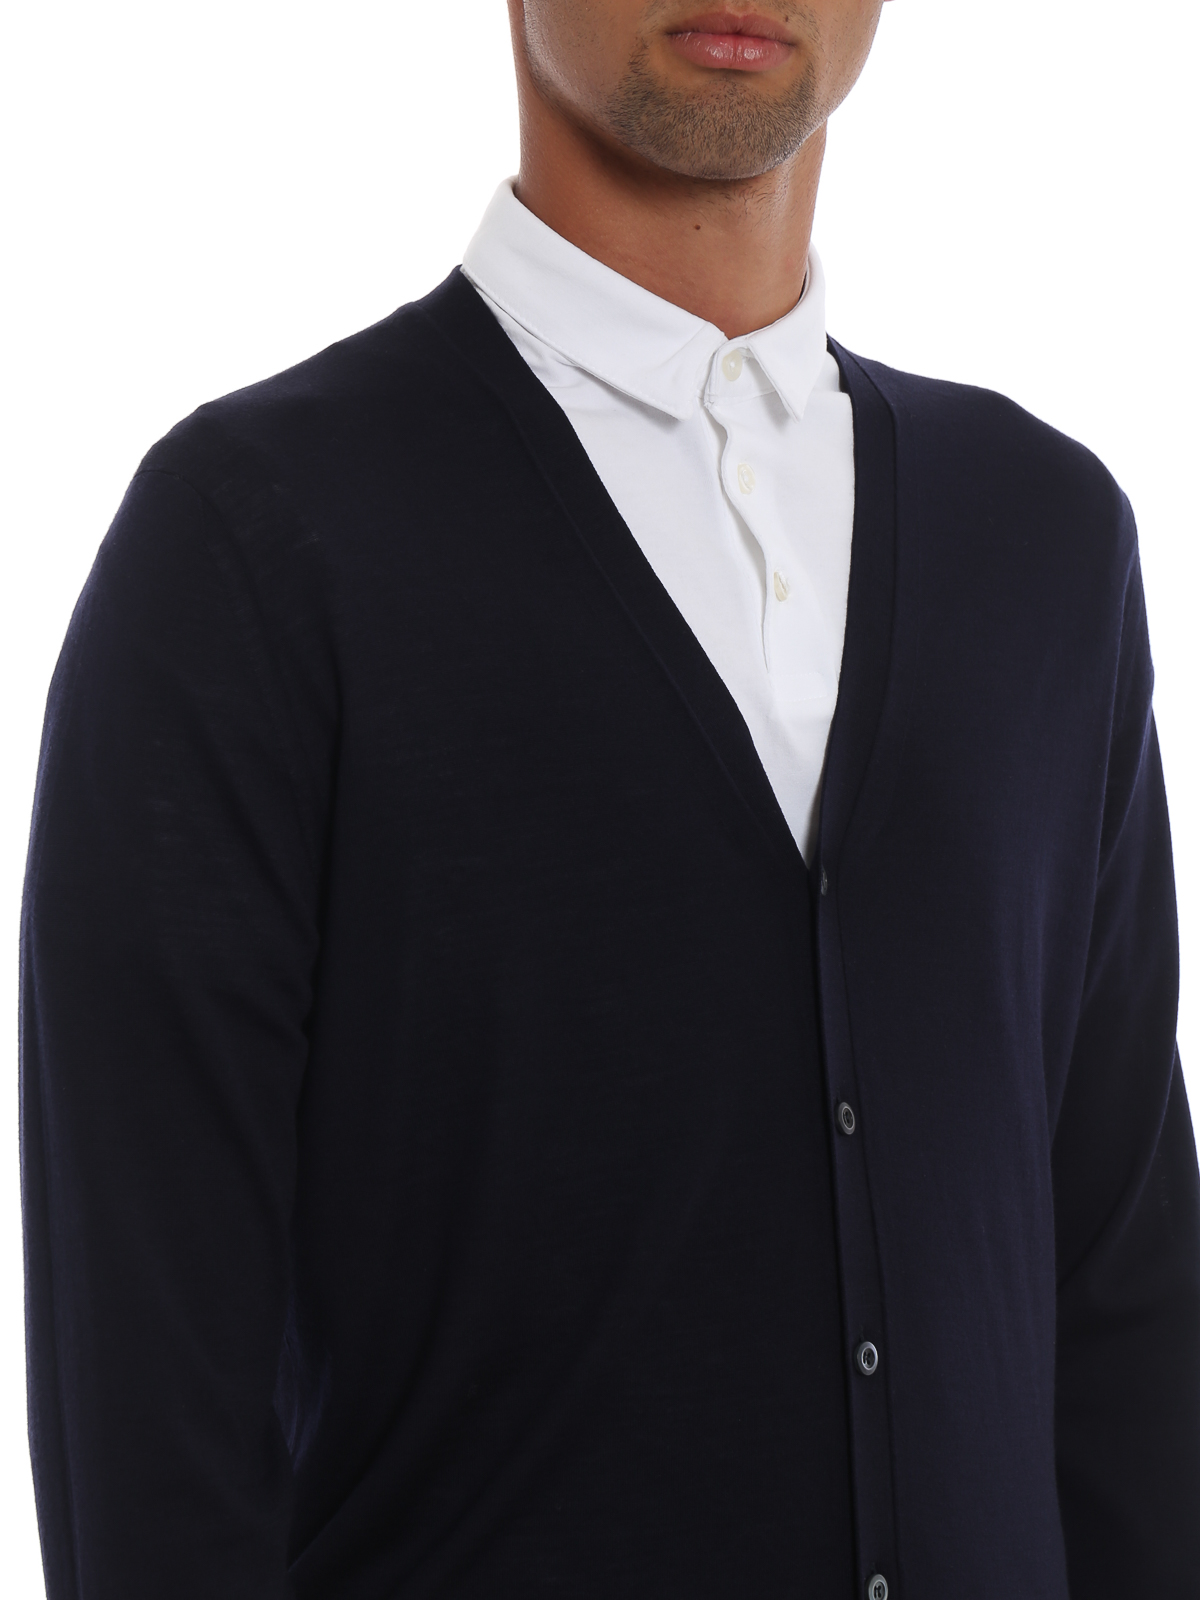 Cardigans Prada - Blue combed wool lightweight cardigan - UMC310C5WSVF